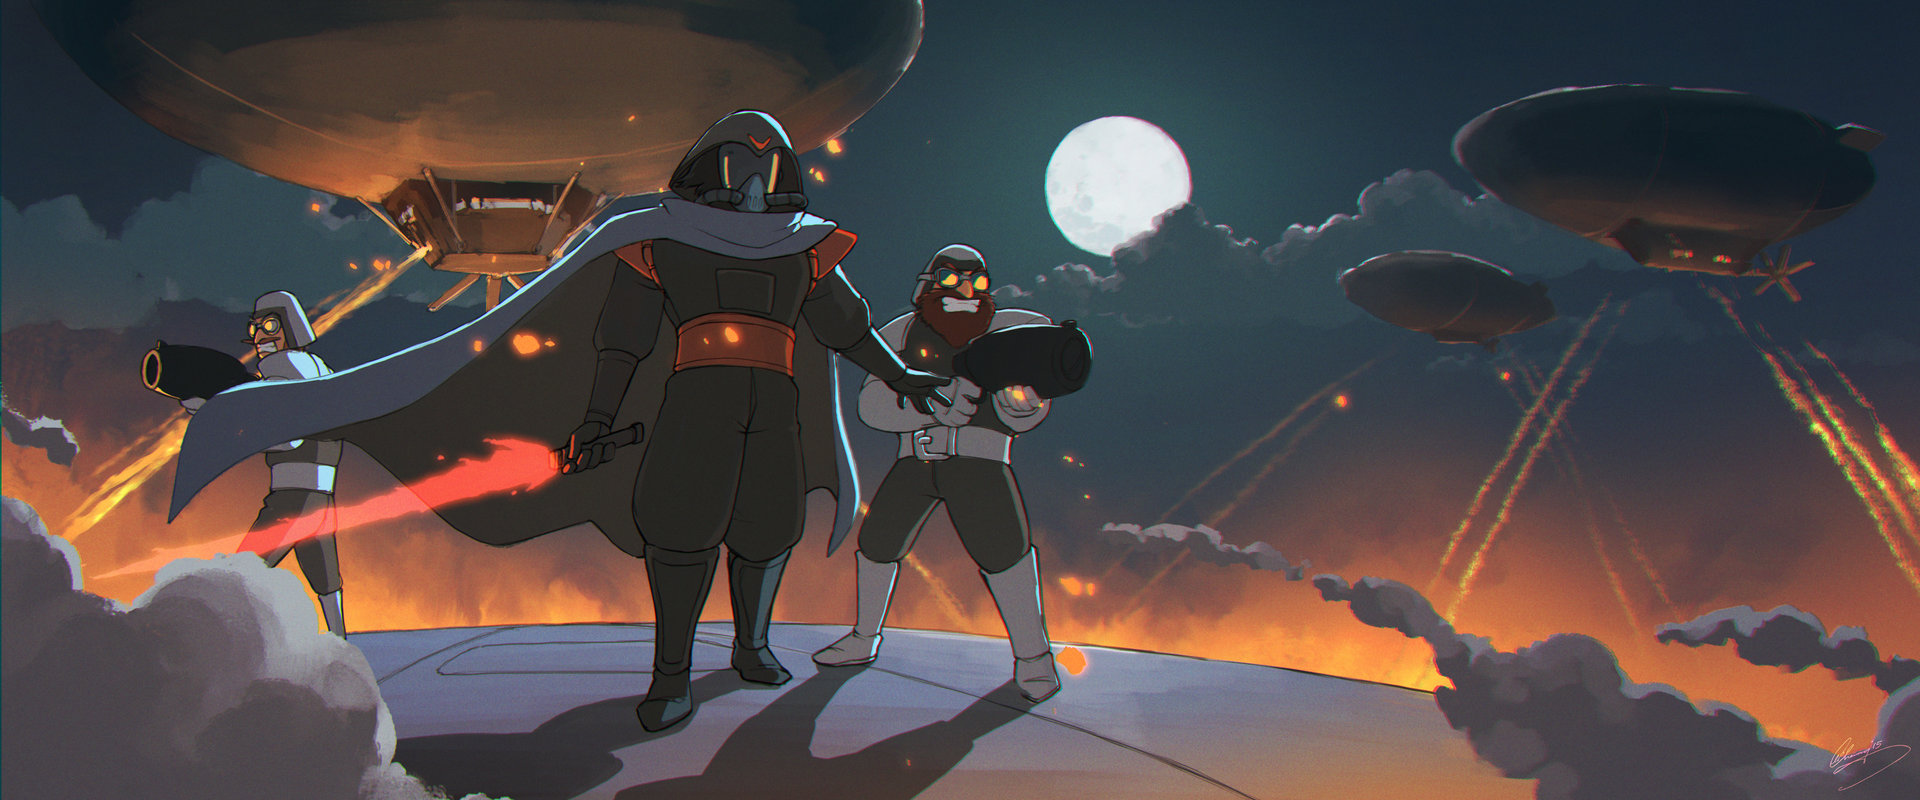 Cyberpunk Diablo & Studio Ghibli’s Star Wars: An Artist’s Impressions